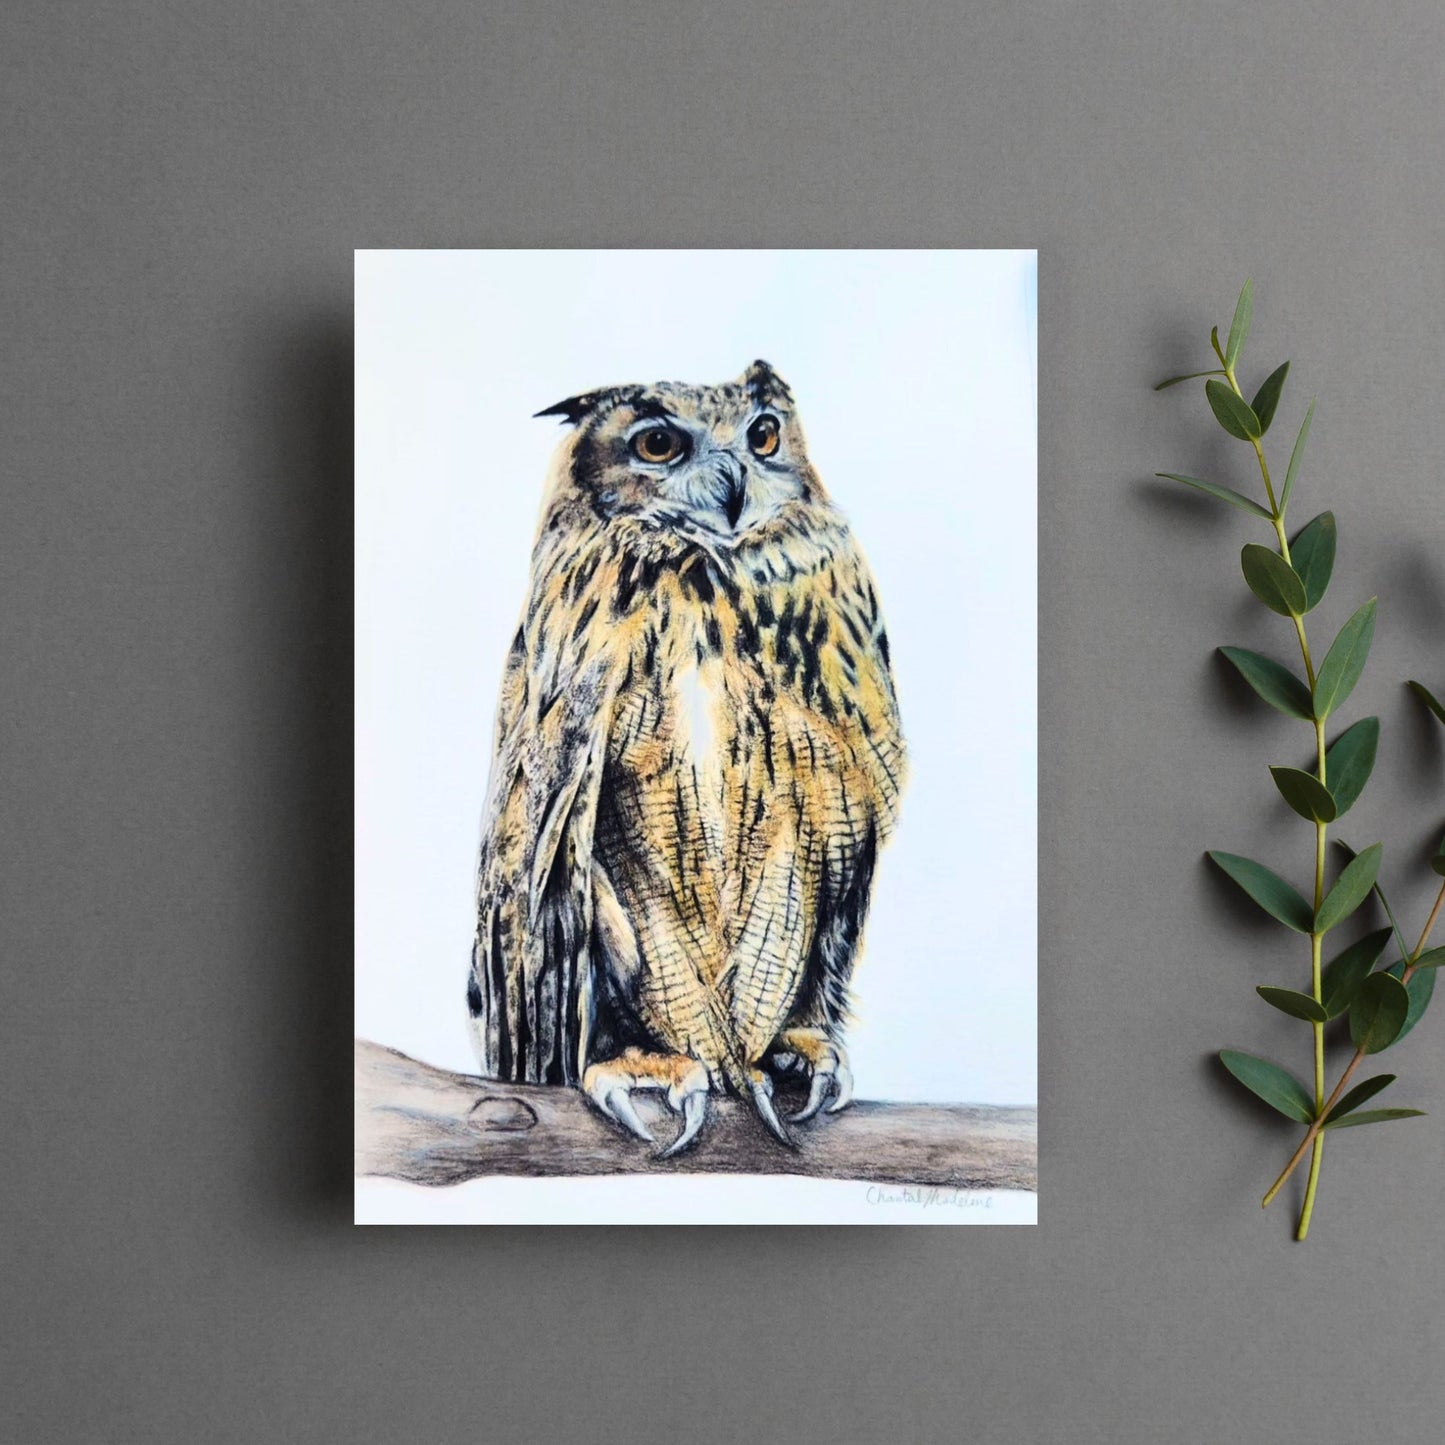 Owl art print, Woodland animal decor, Wildlife art, Giclee print on fine art paper